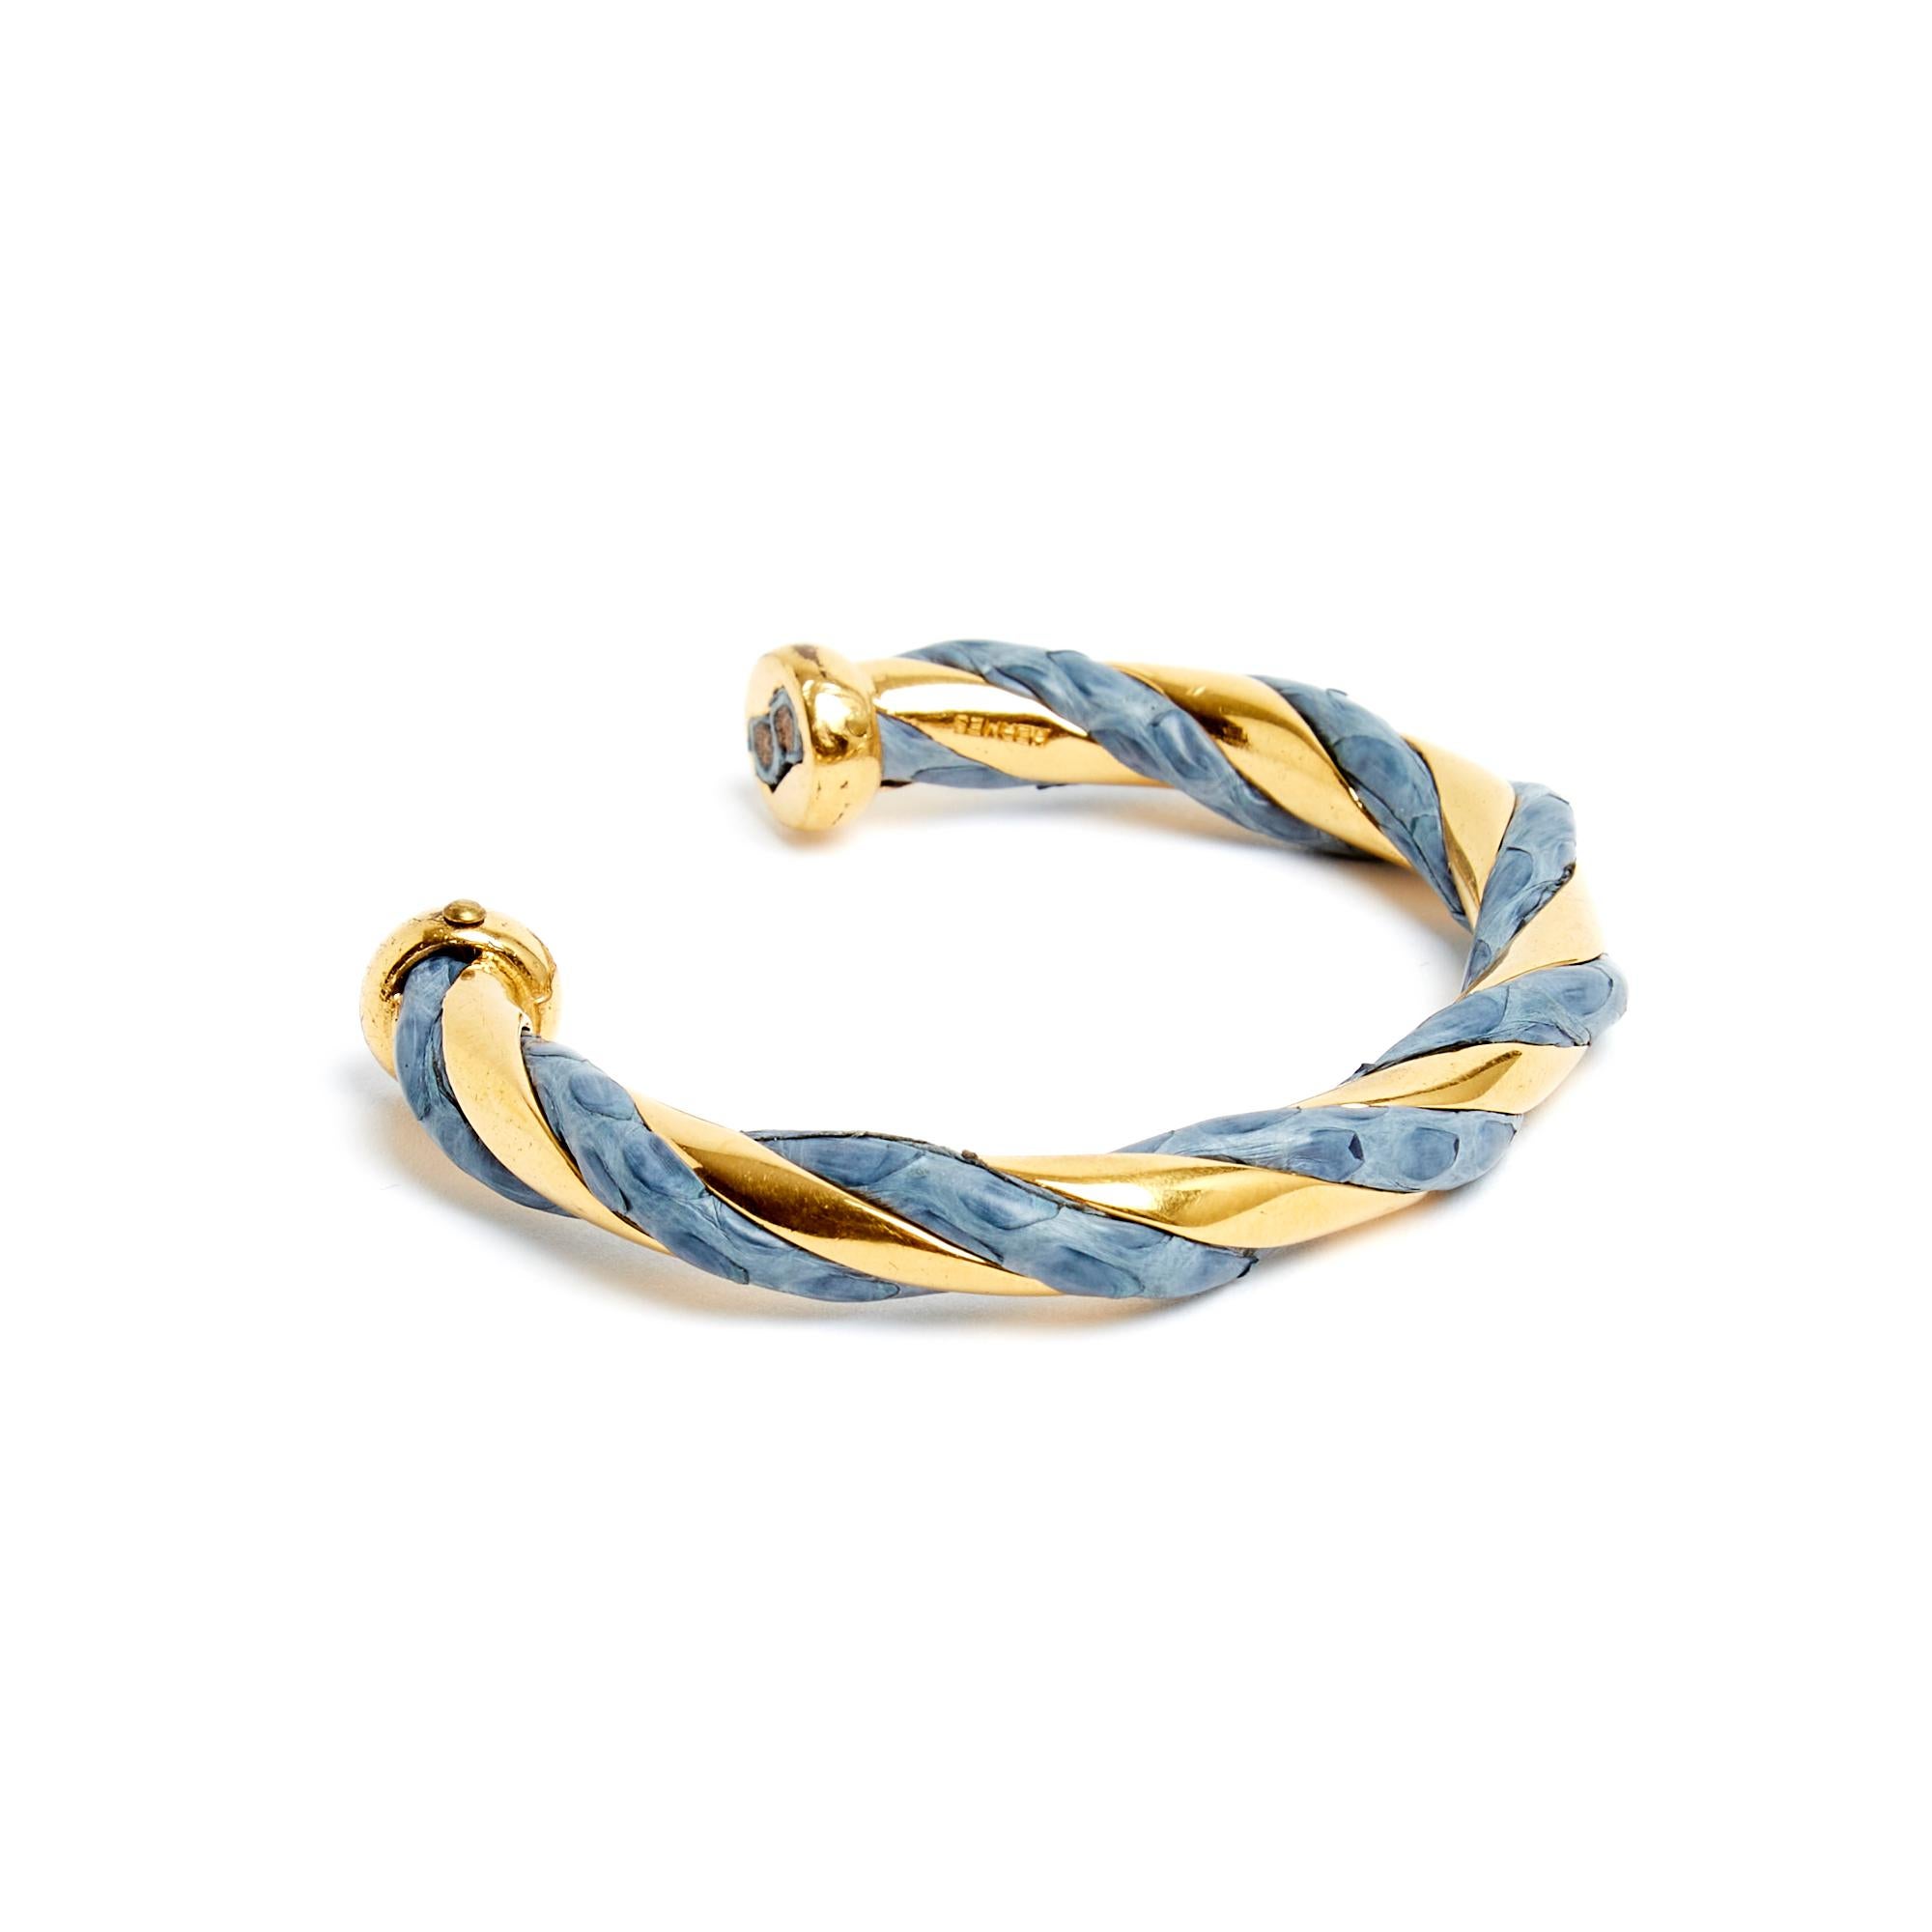 Hermès bracelet model Torsade (circa 1980) open in gold metal and blue denim leather. Interior length 5.1 cm x interior width 4.6 cm, bracelet diameter 0.75 cm. The bracelet is vintage but it is in excellent condition, beautiful on the wrist.